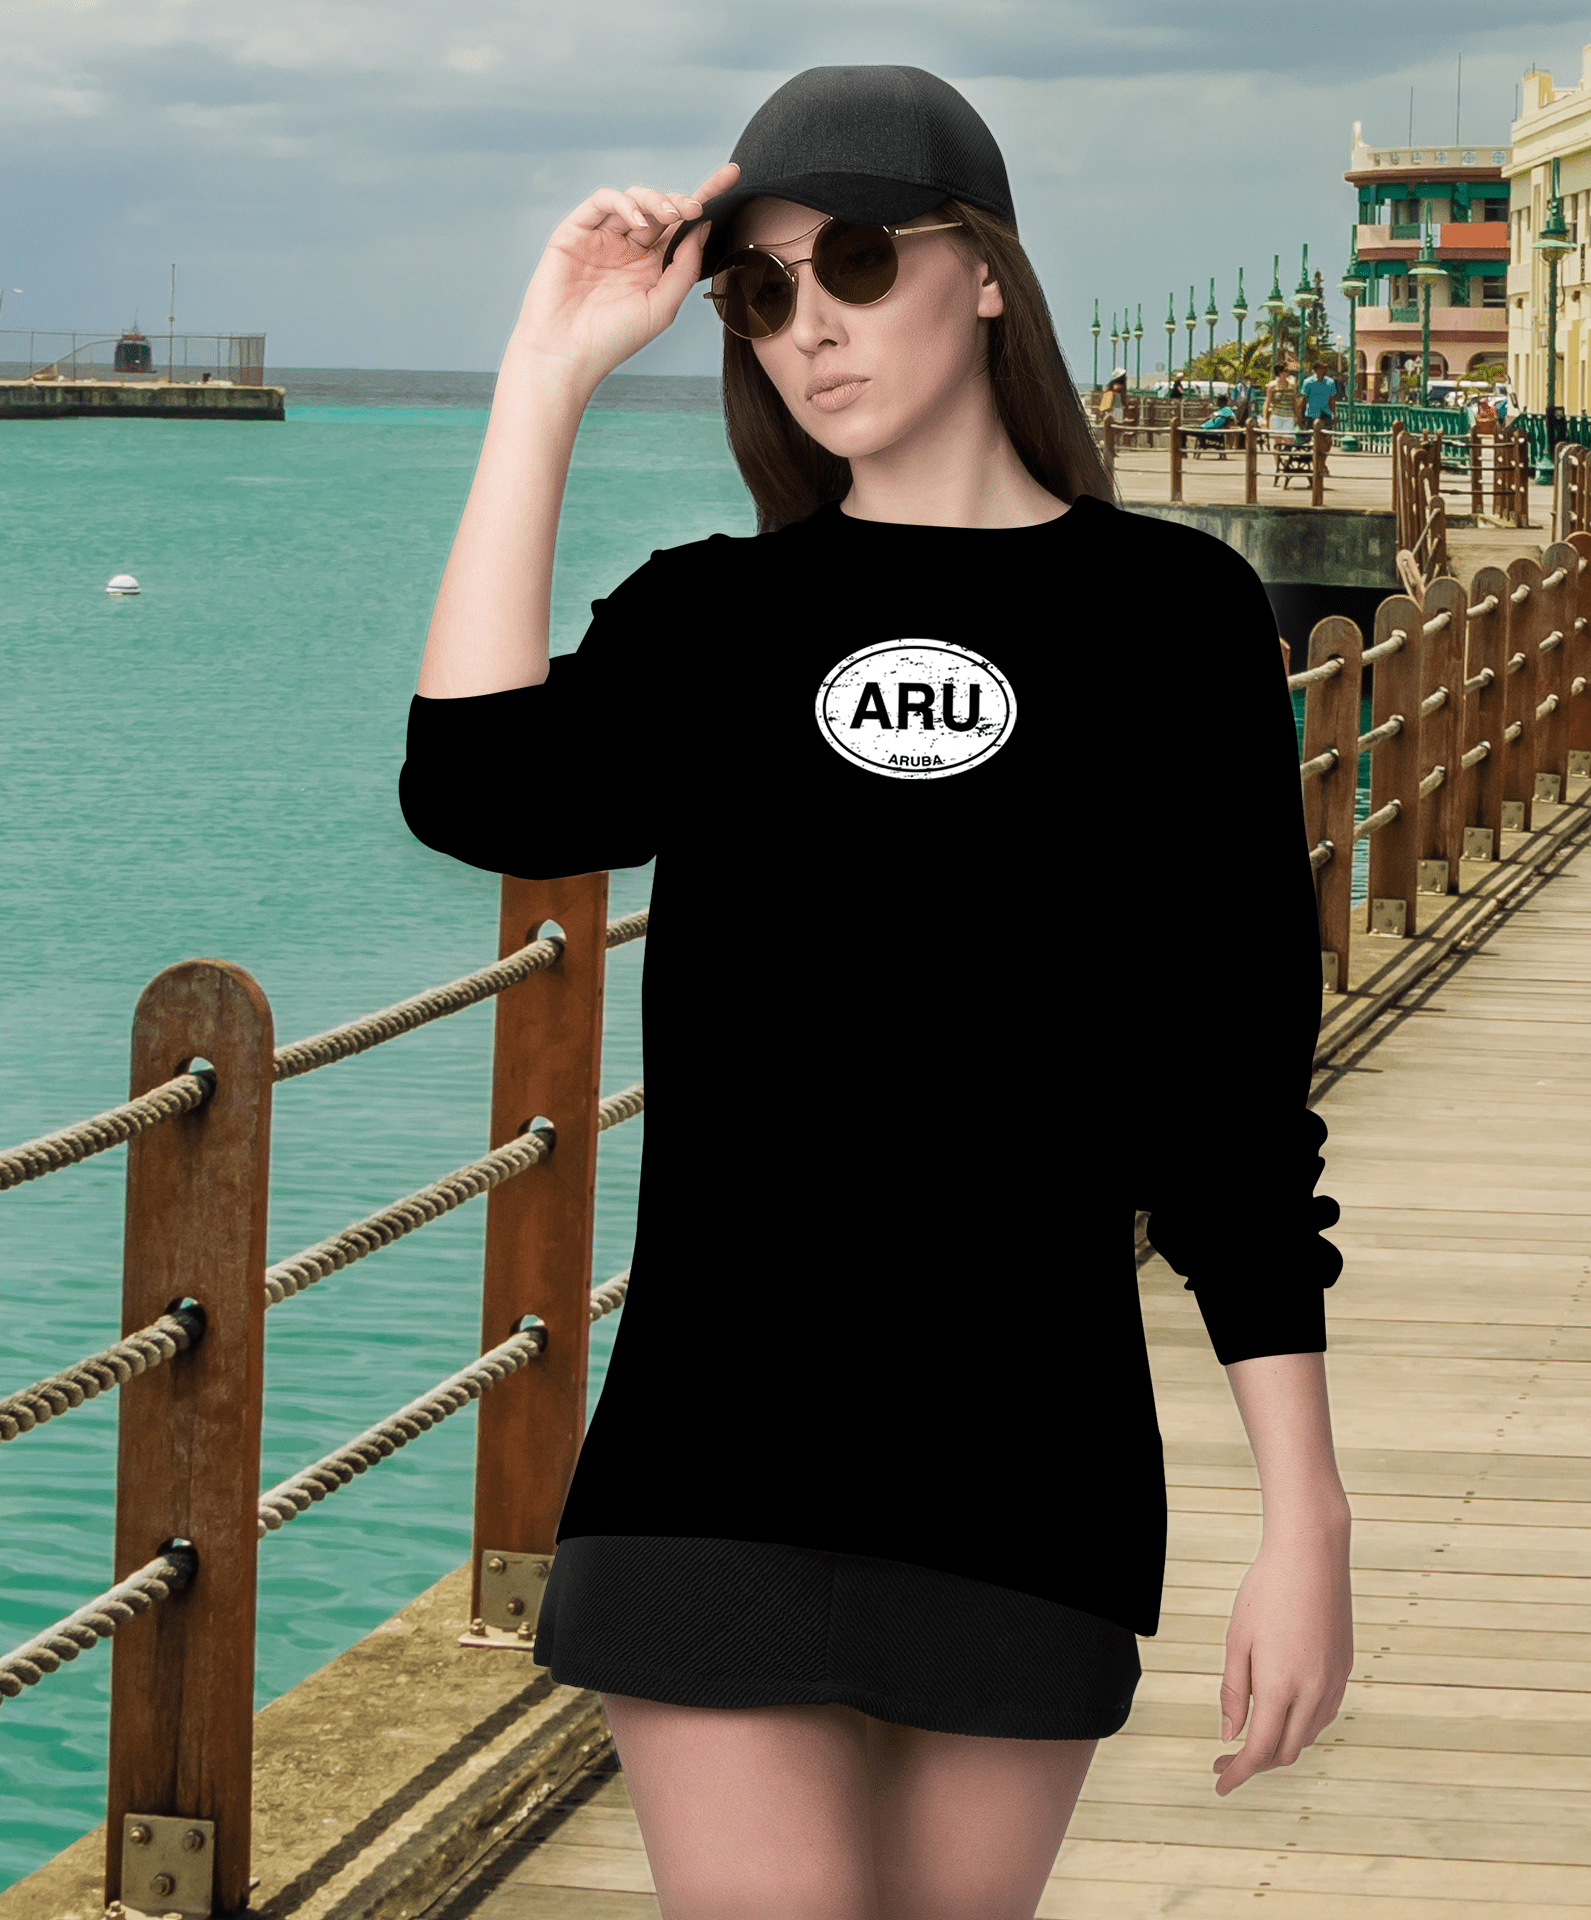 Aruba Women's Classic Long Sleeve T-Shirts - My Destination Location